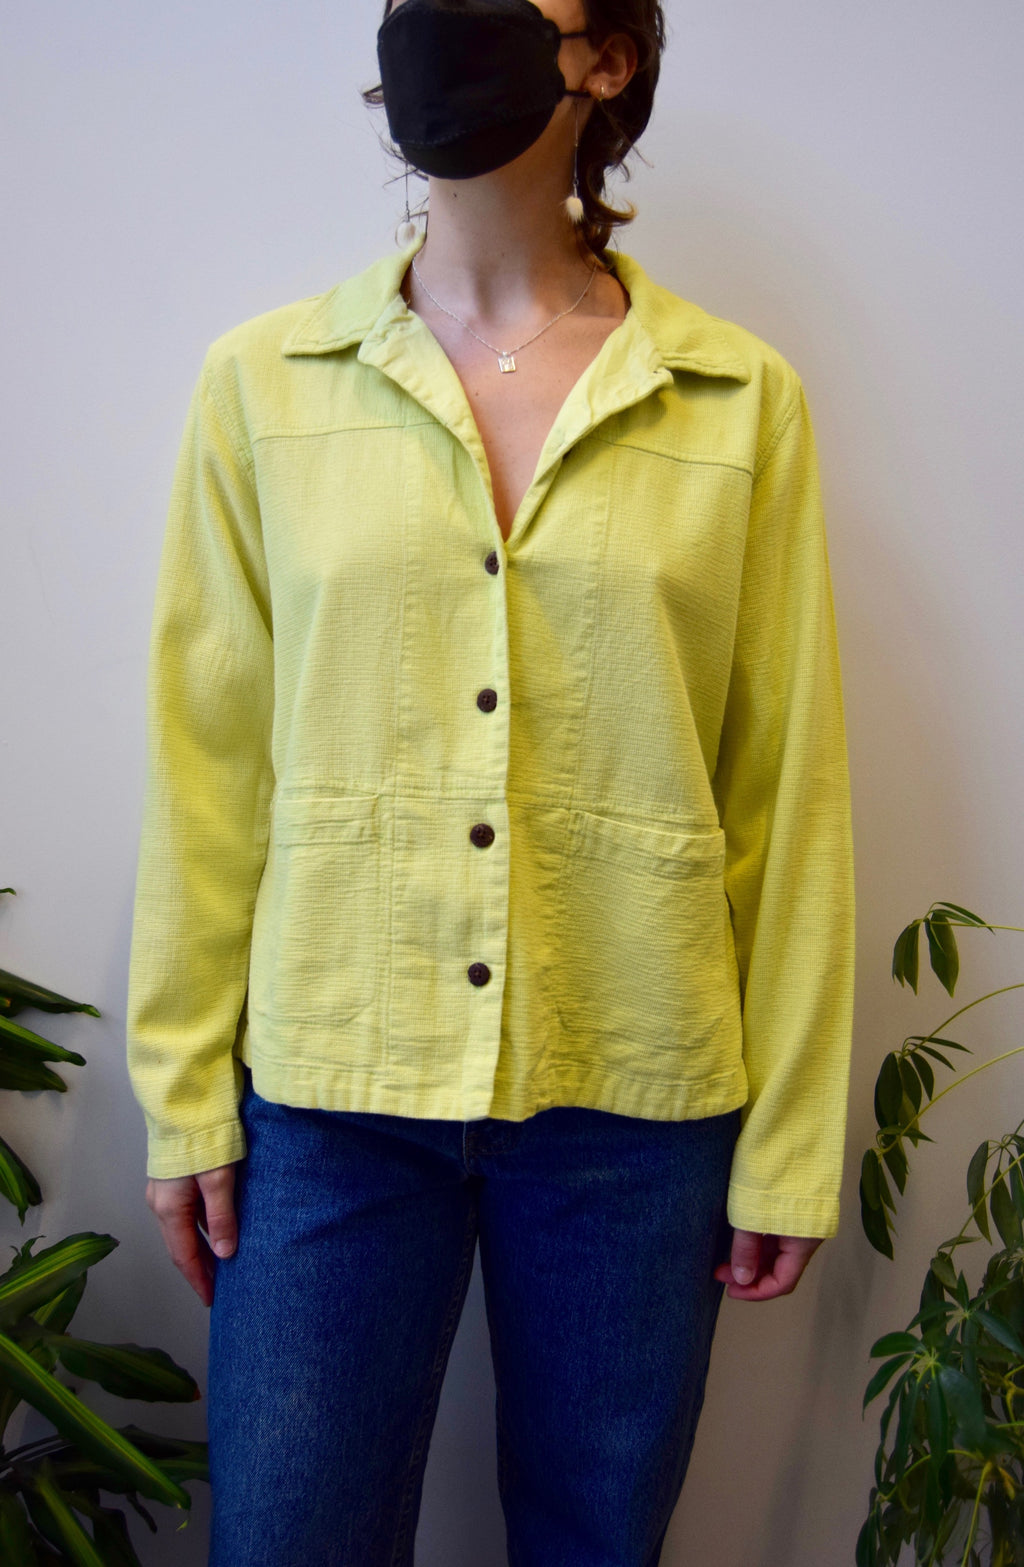 Vibrant Chartreuse Jacket